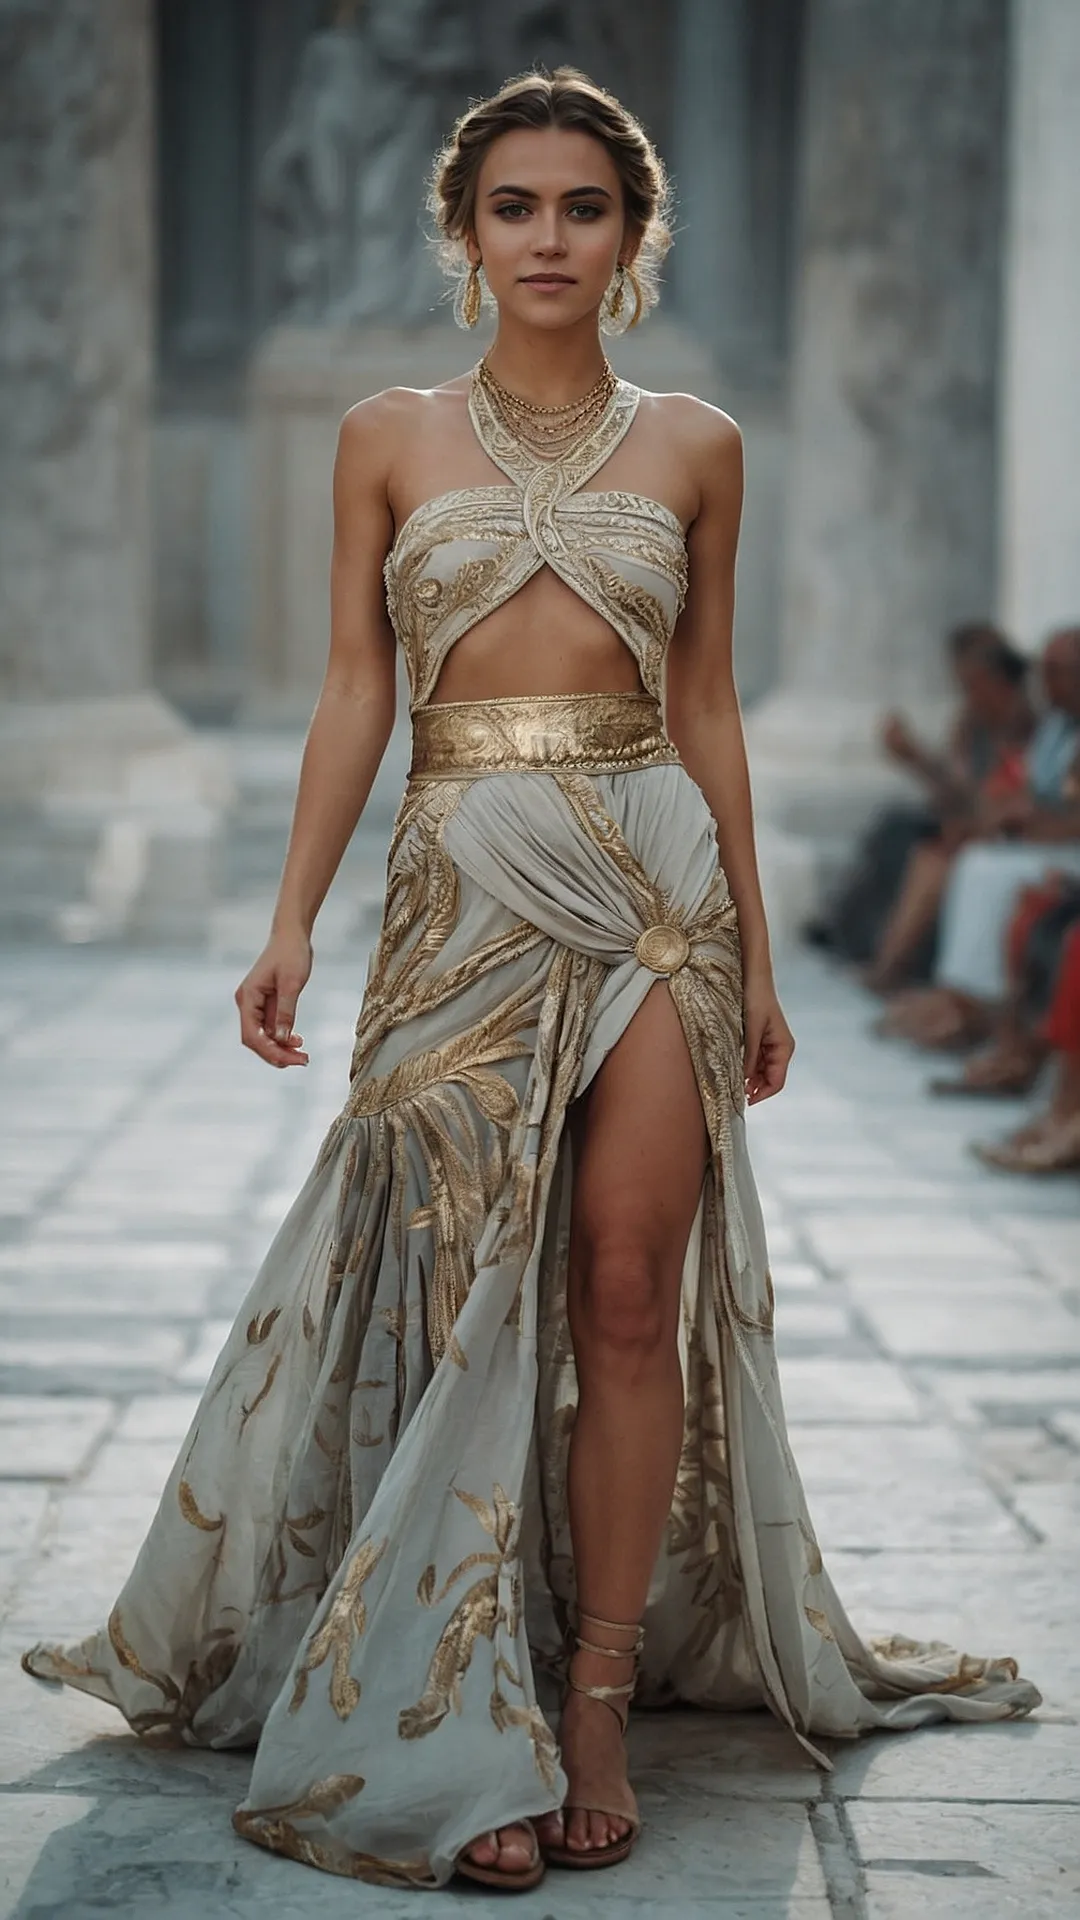 Timeless Grace: Embracing Greek Goddess Fashion